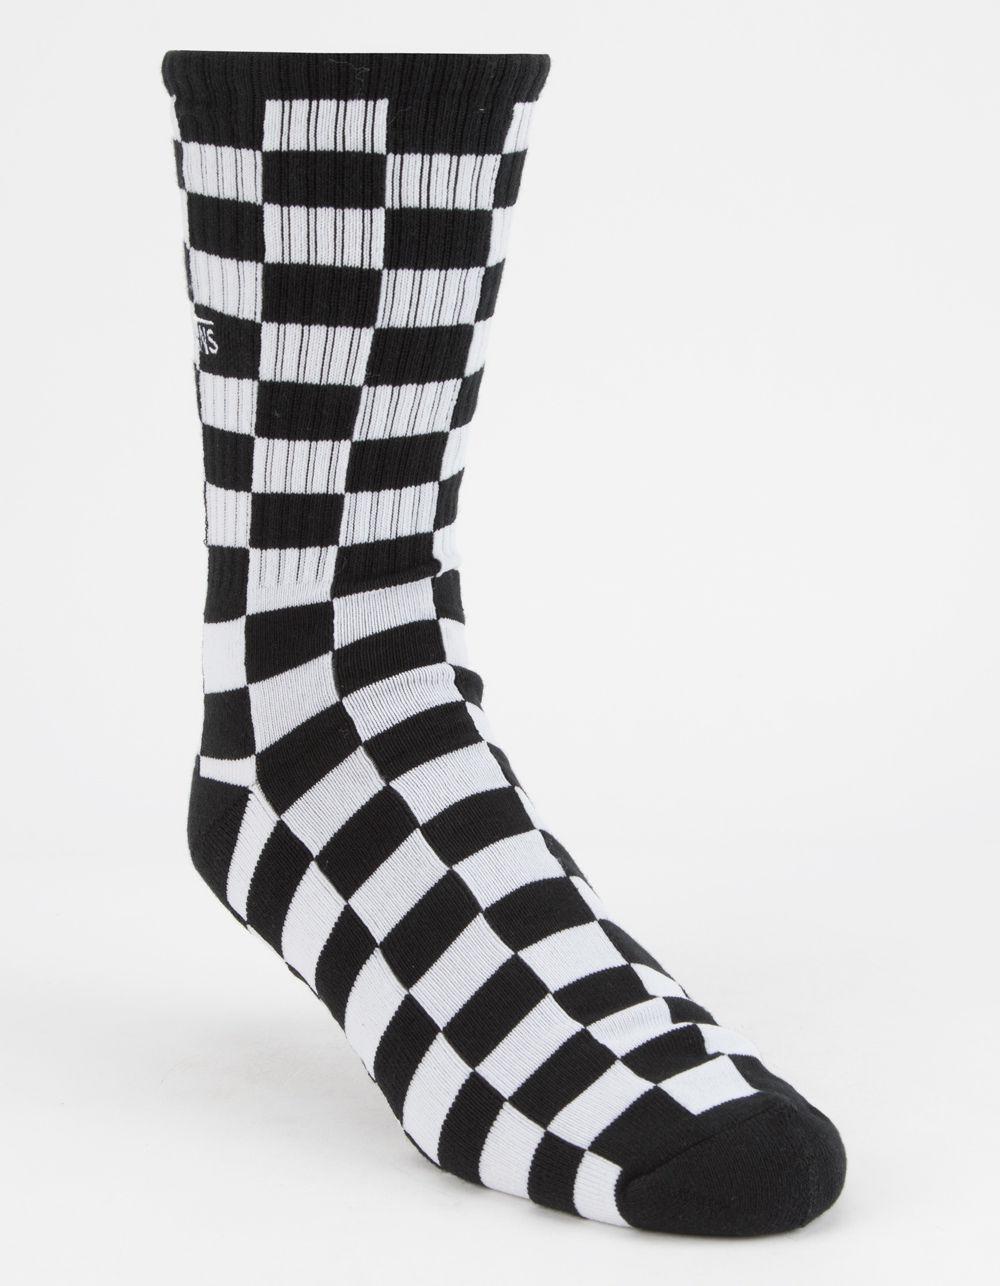 Vans Synthetic Checkerboard Crew Socks Black / White for Men - Save 10% ...